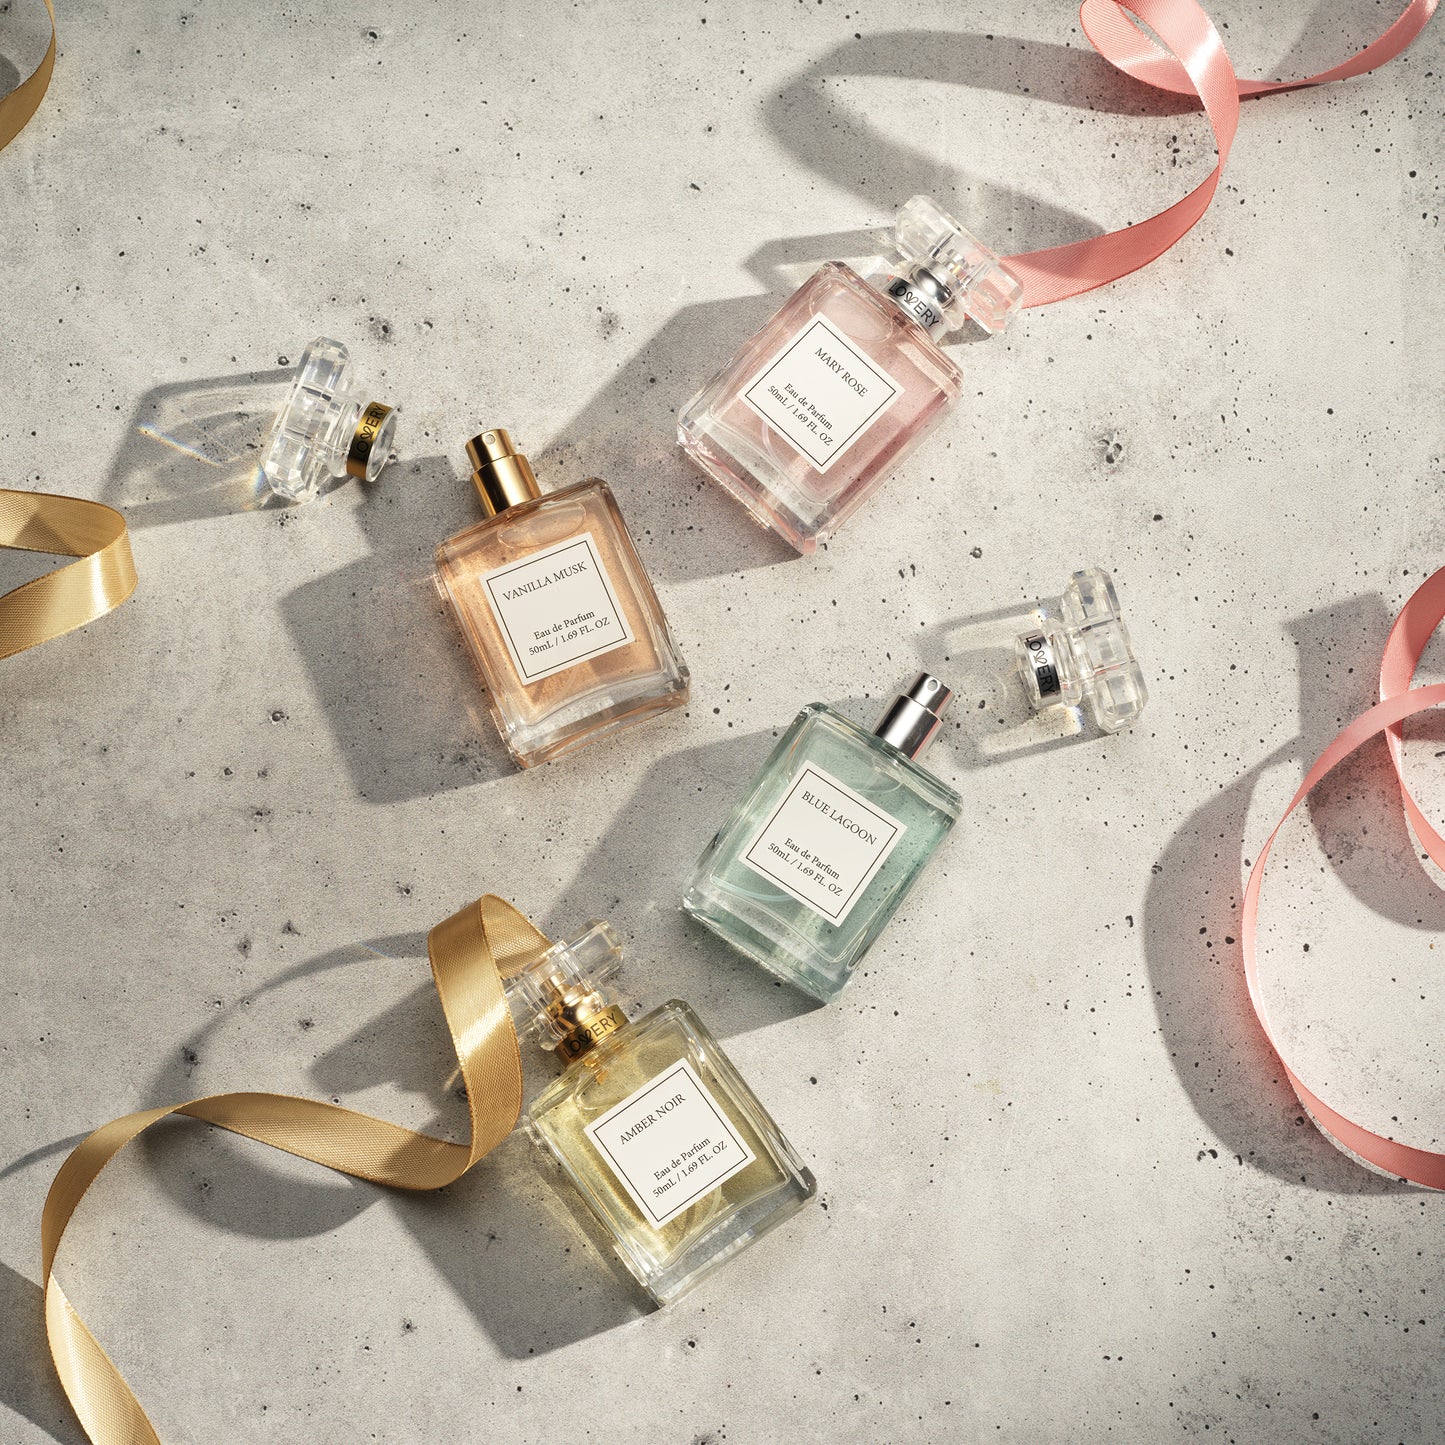 Perfume Set for Women - 4pc Floral Parfum Sampler Gifts